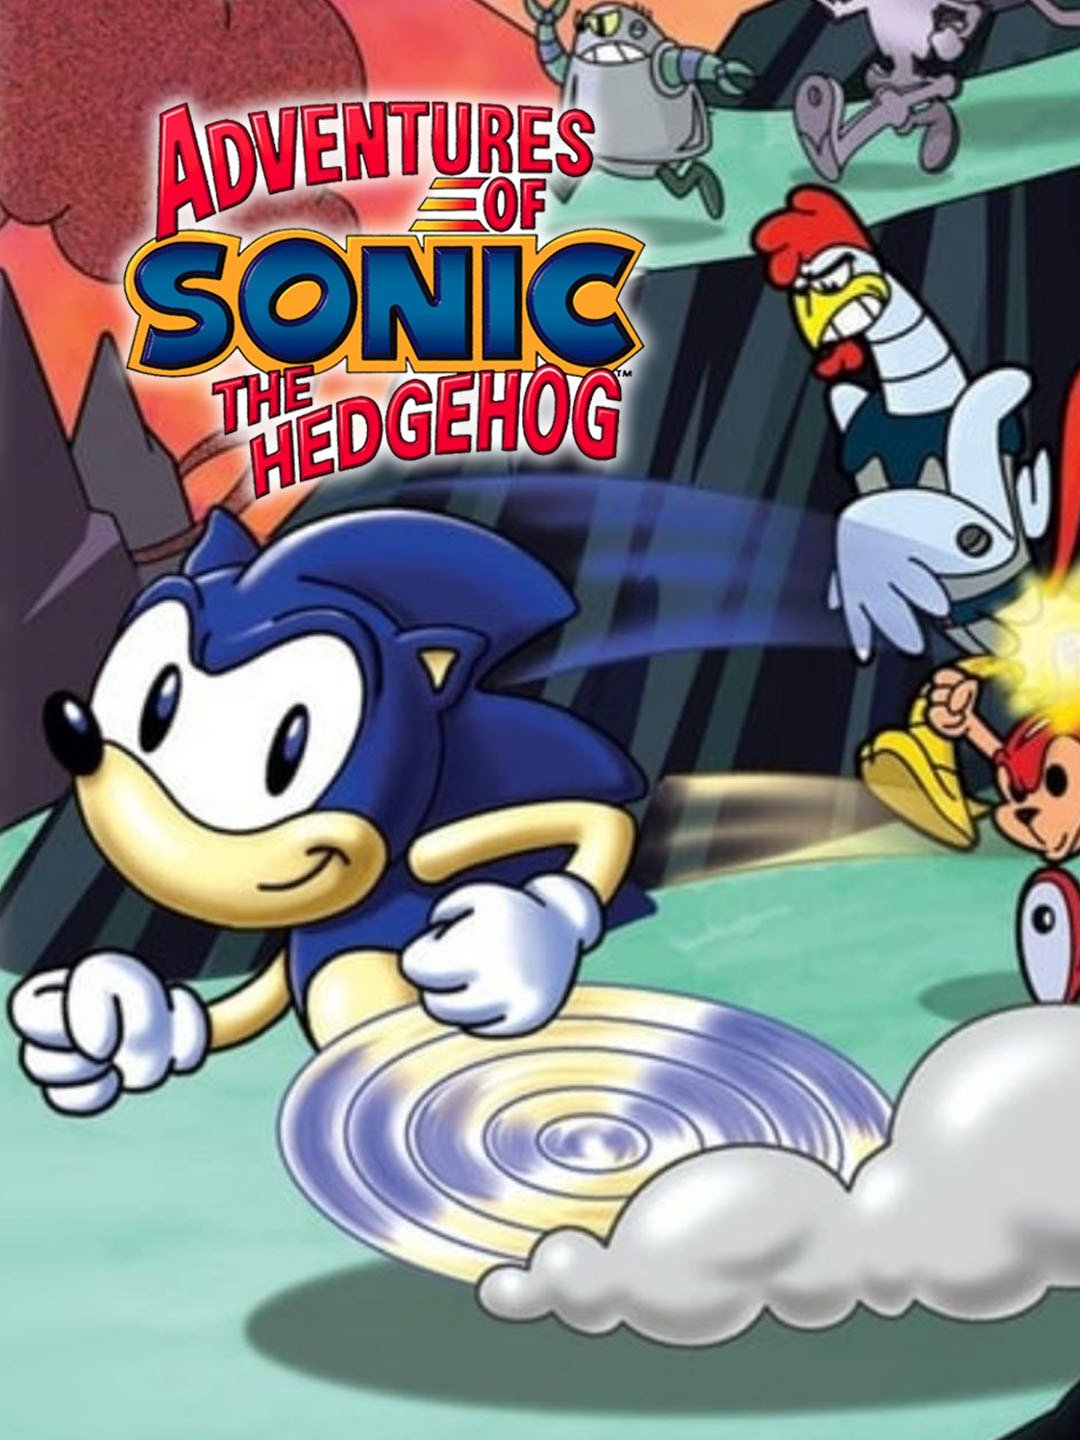 Adventure of sonic the hedgehog